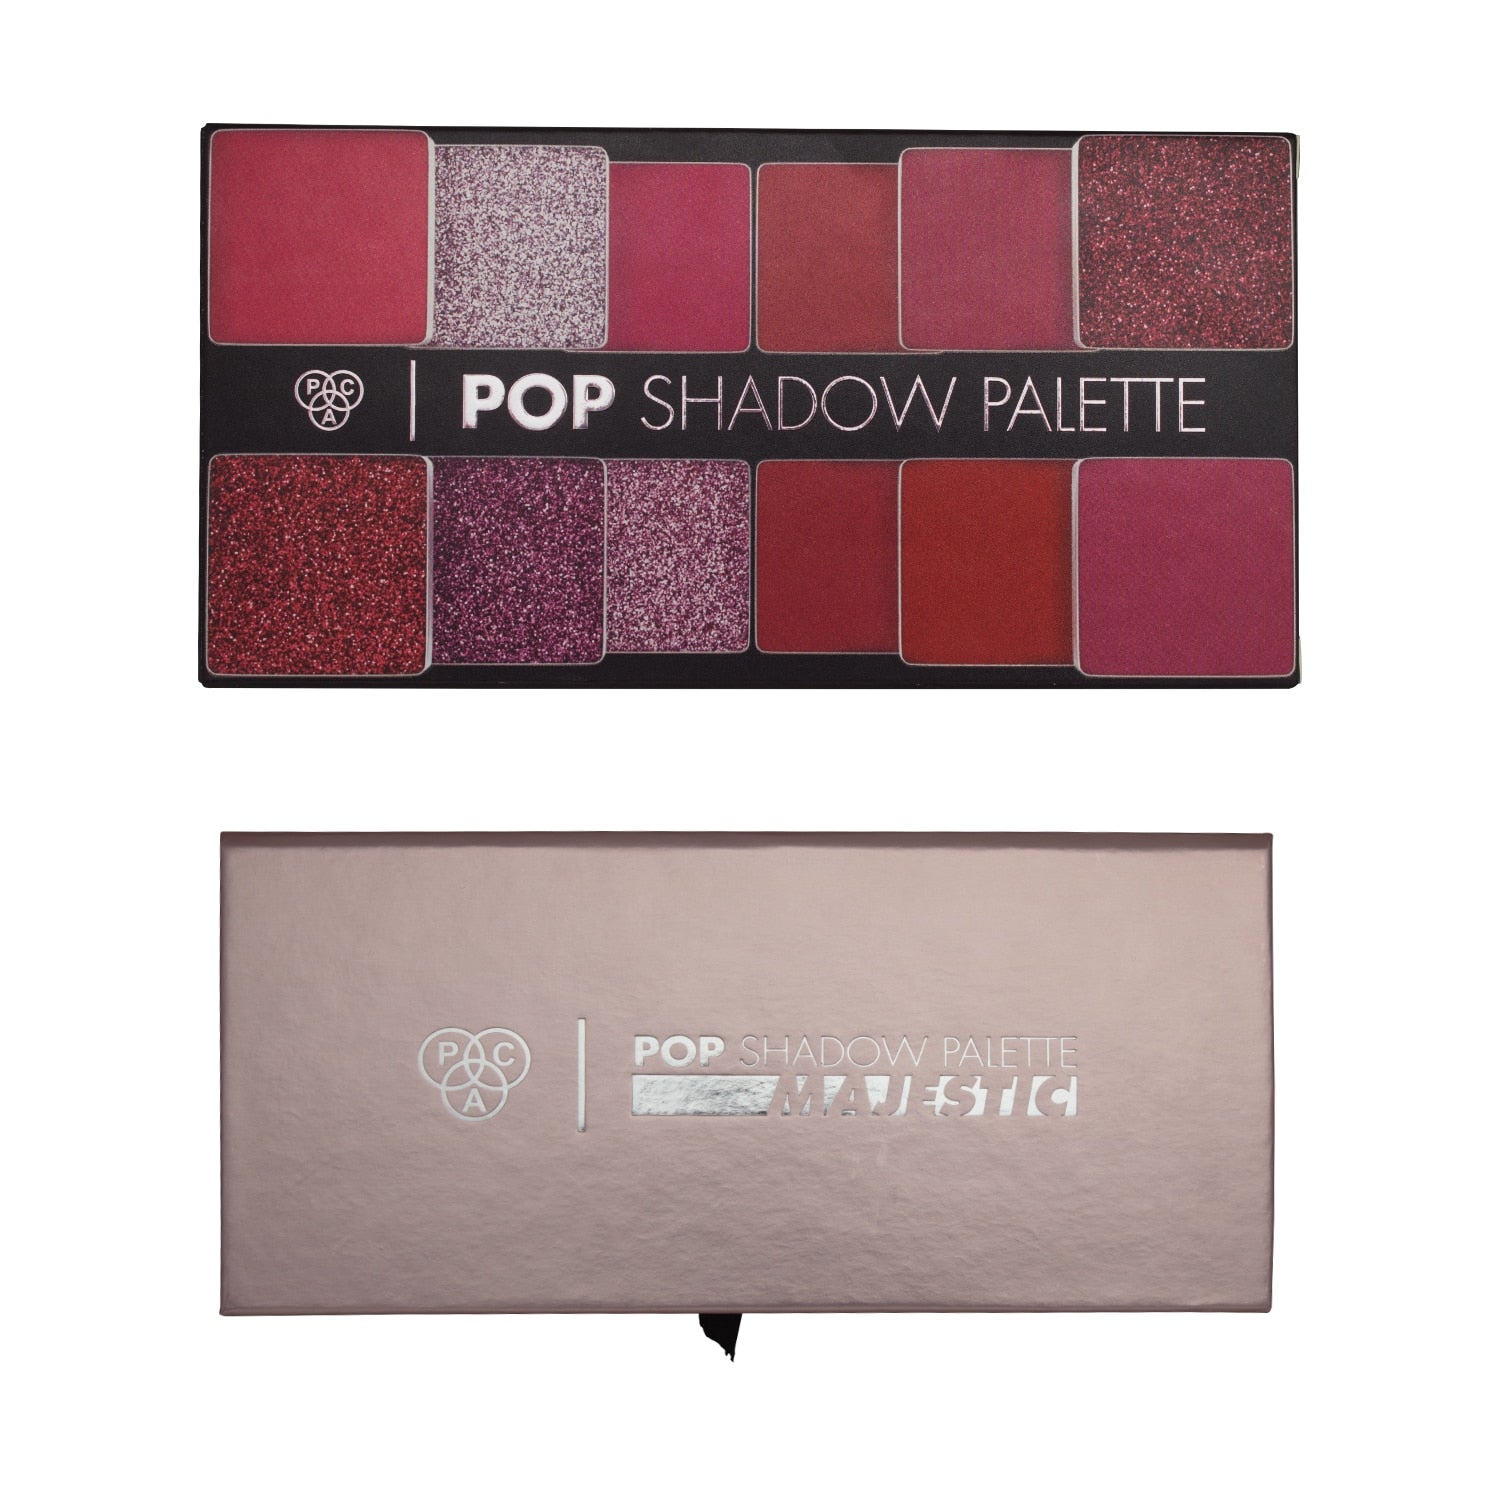 PAC Pop Shadow Palette X12 - Majestic PAC